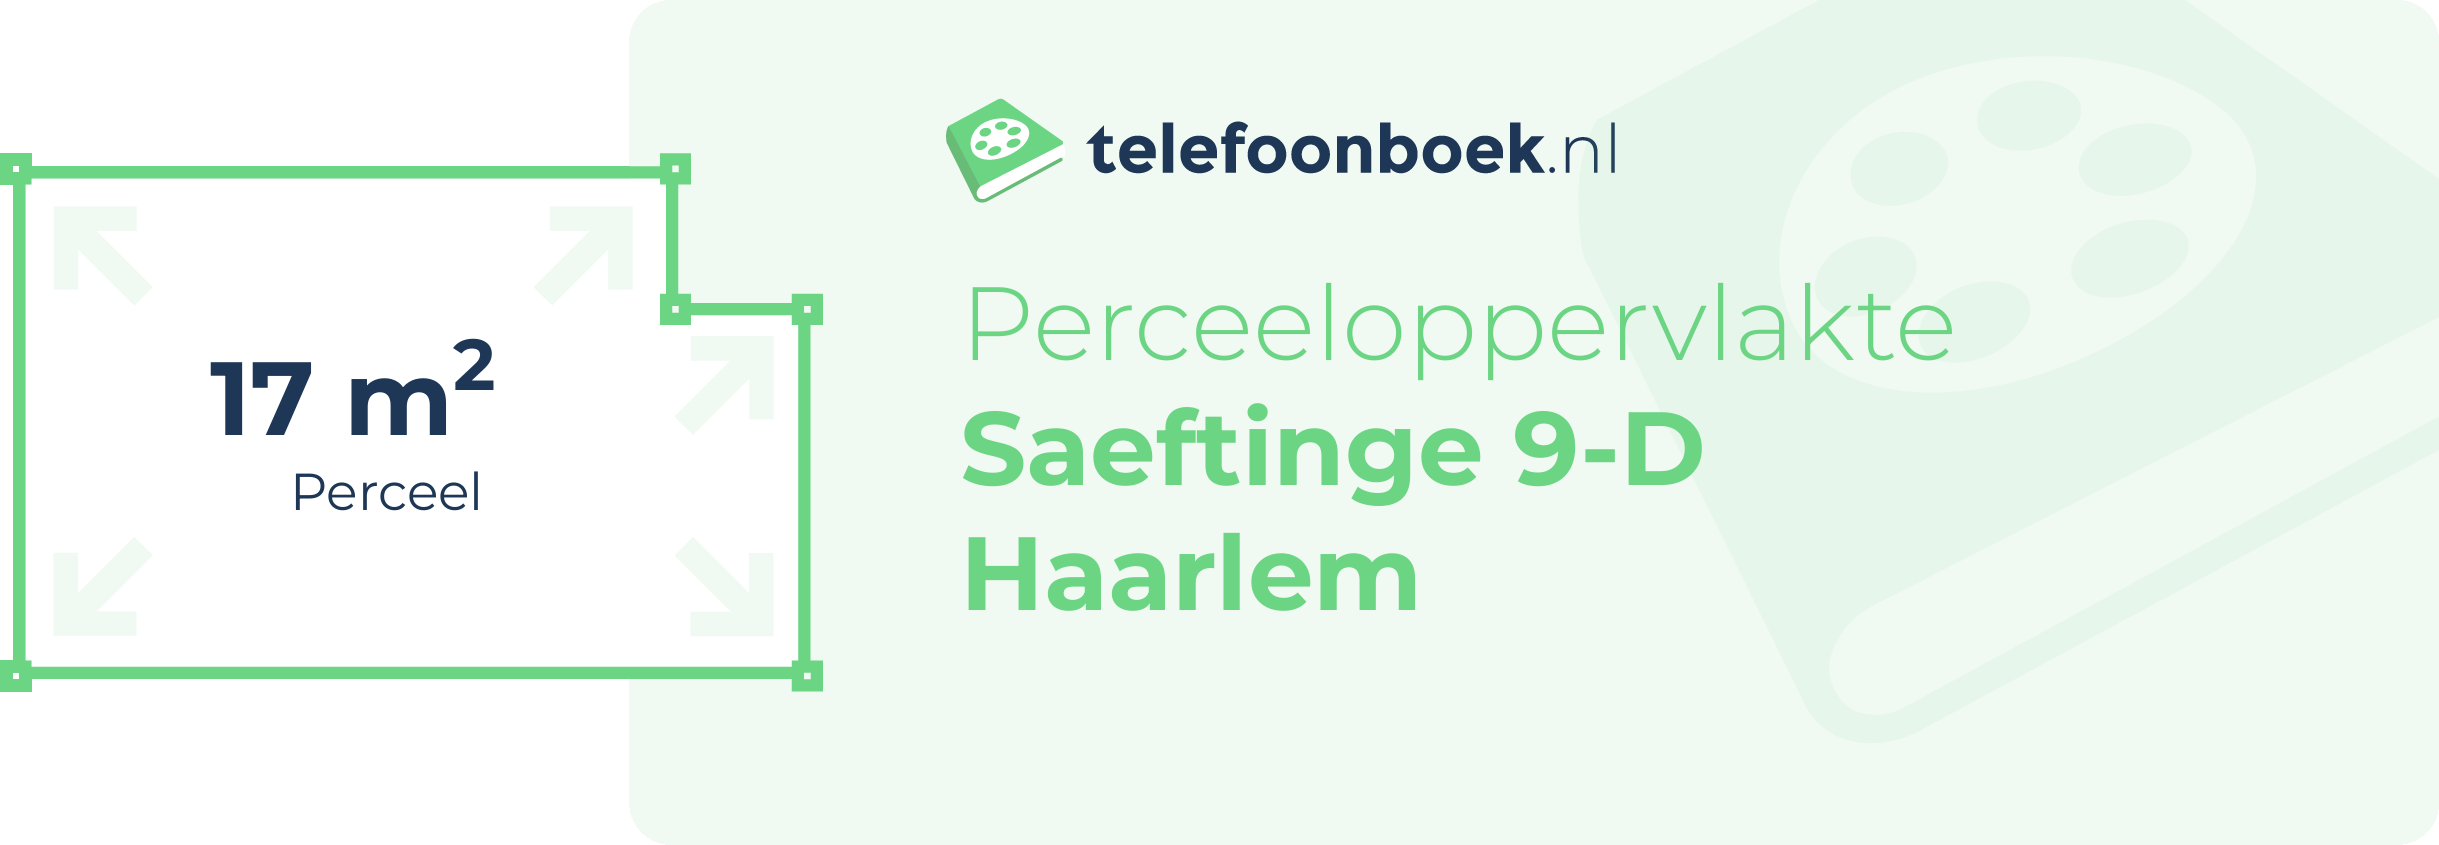 Perceeloppervlakte Saeftinge 9-D Haarlem